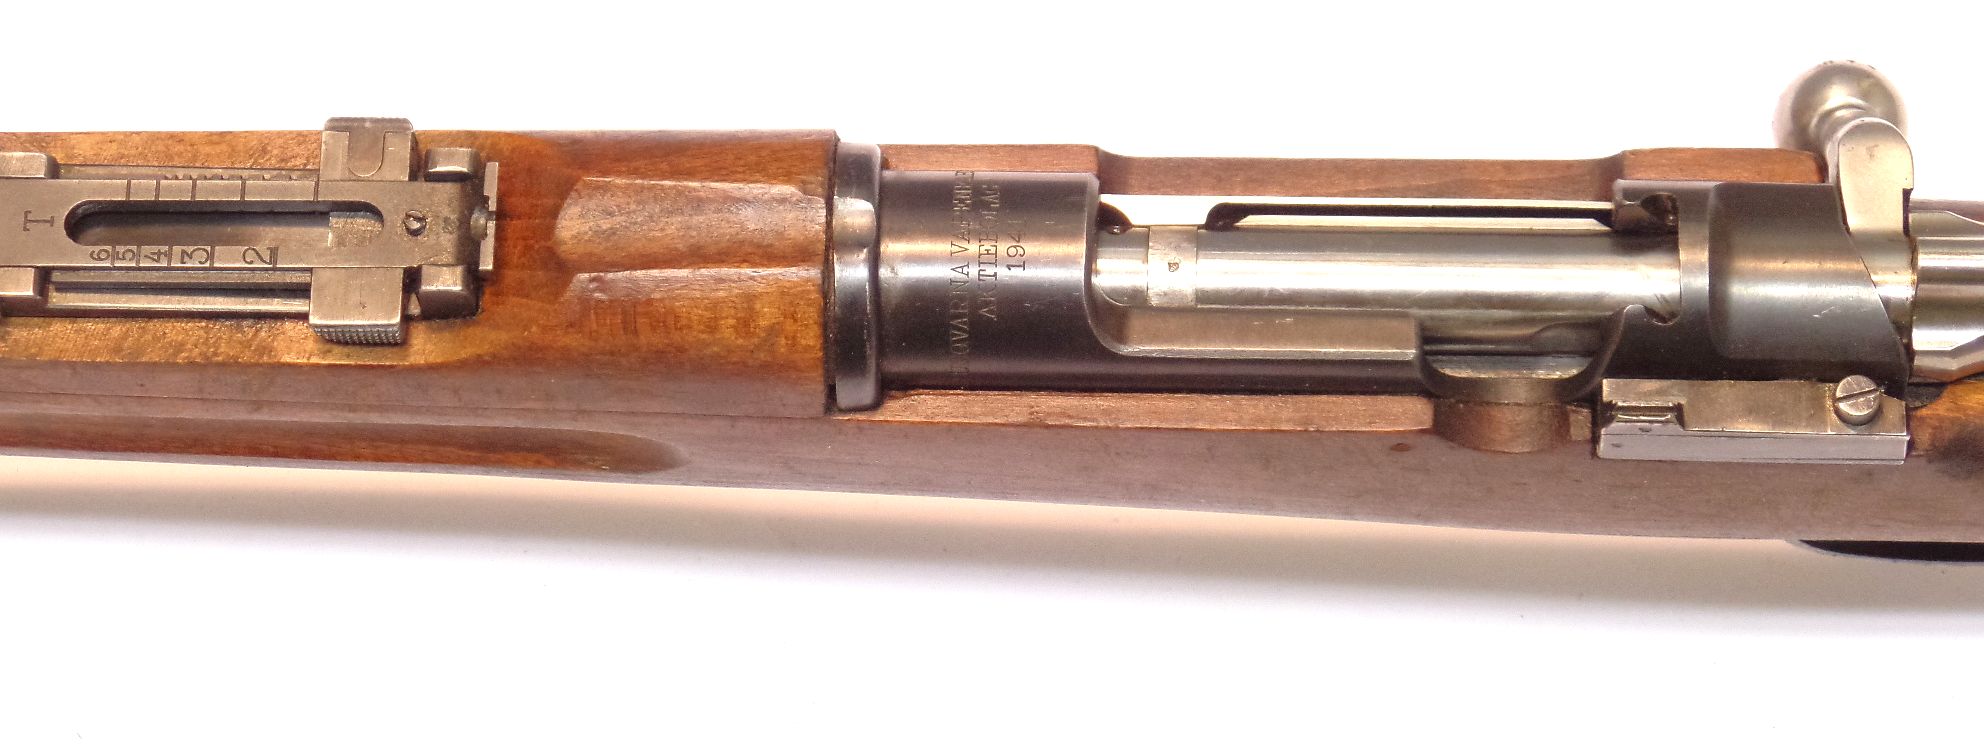 CARL GUSTAV M96-38 calibre 6.5x55